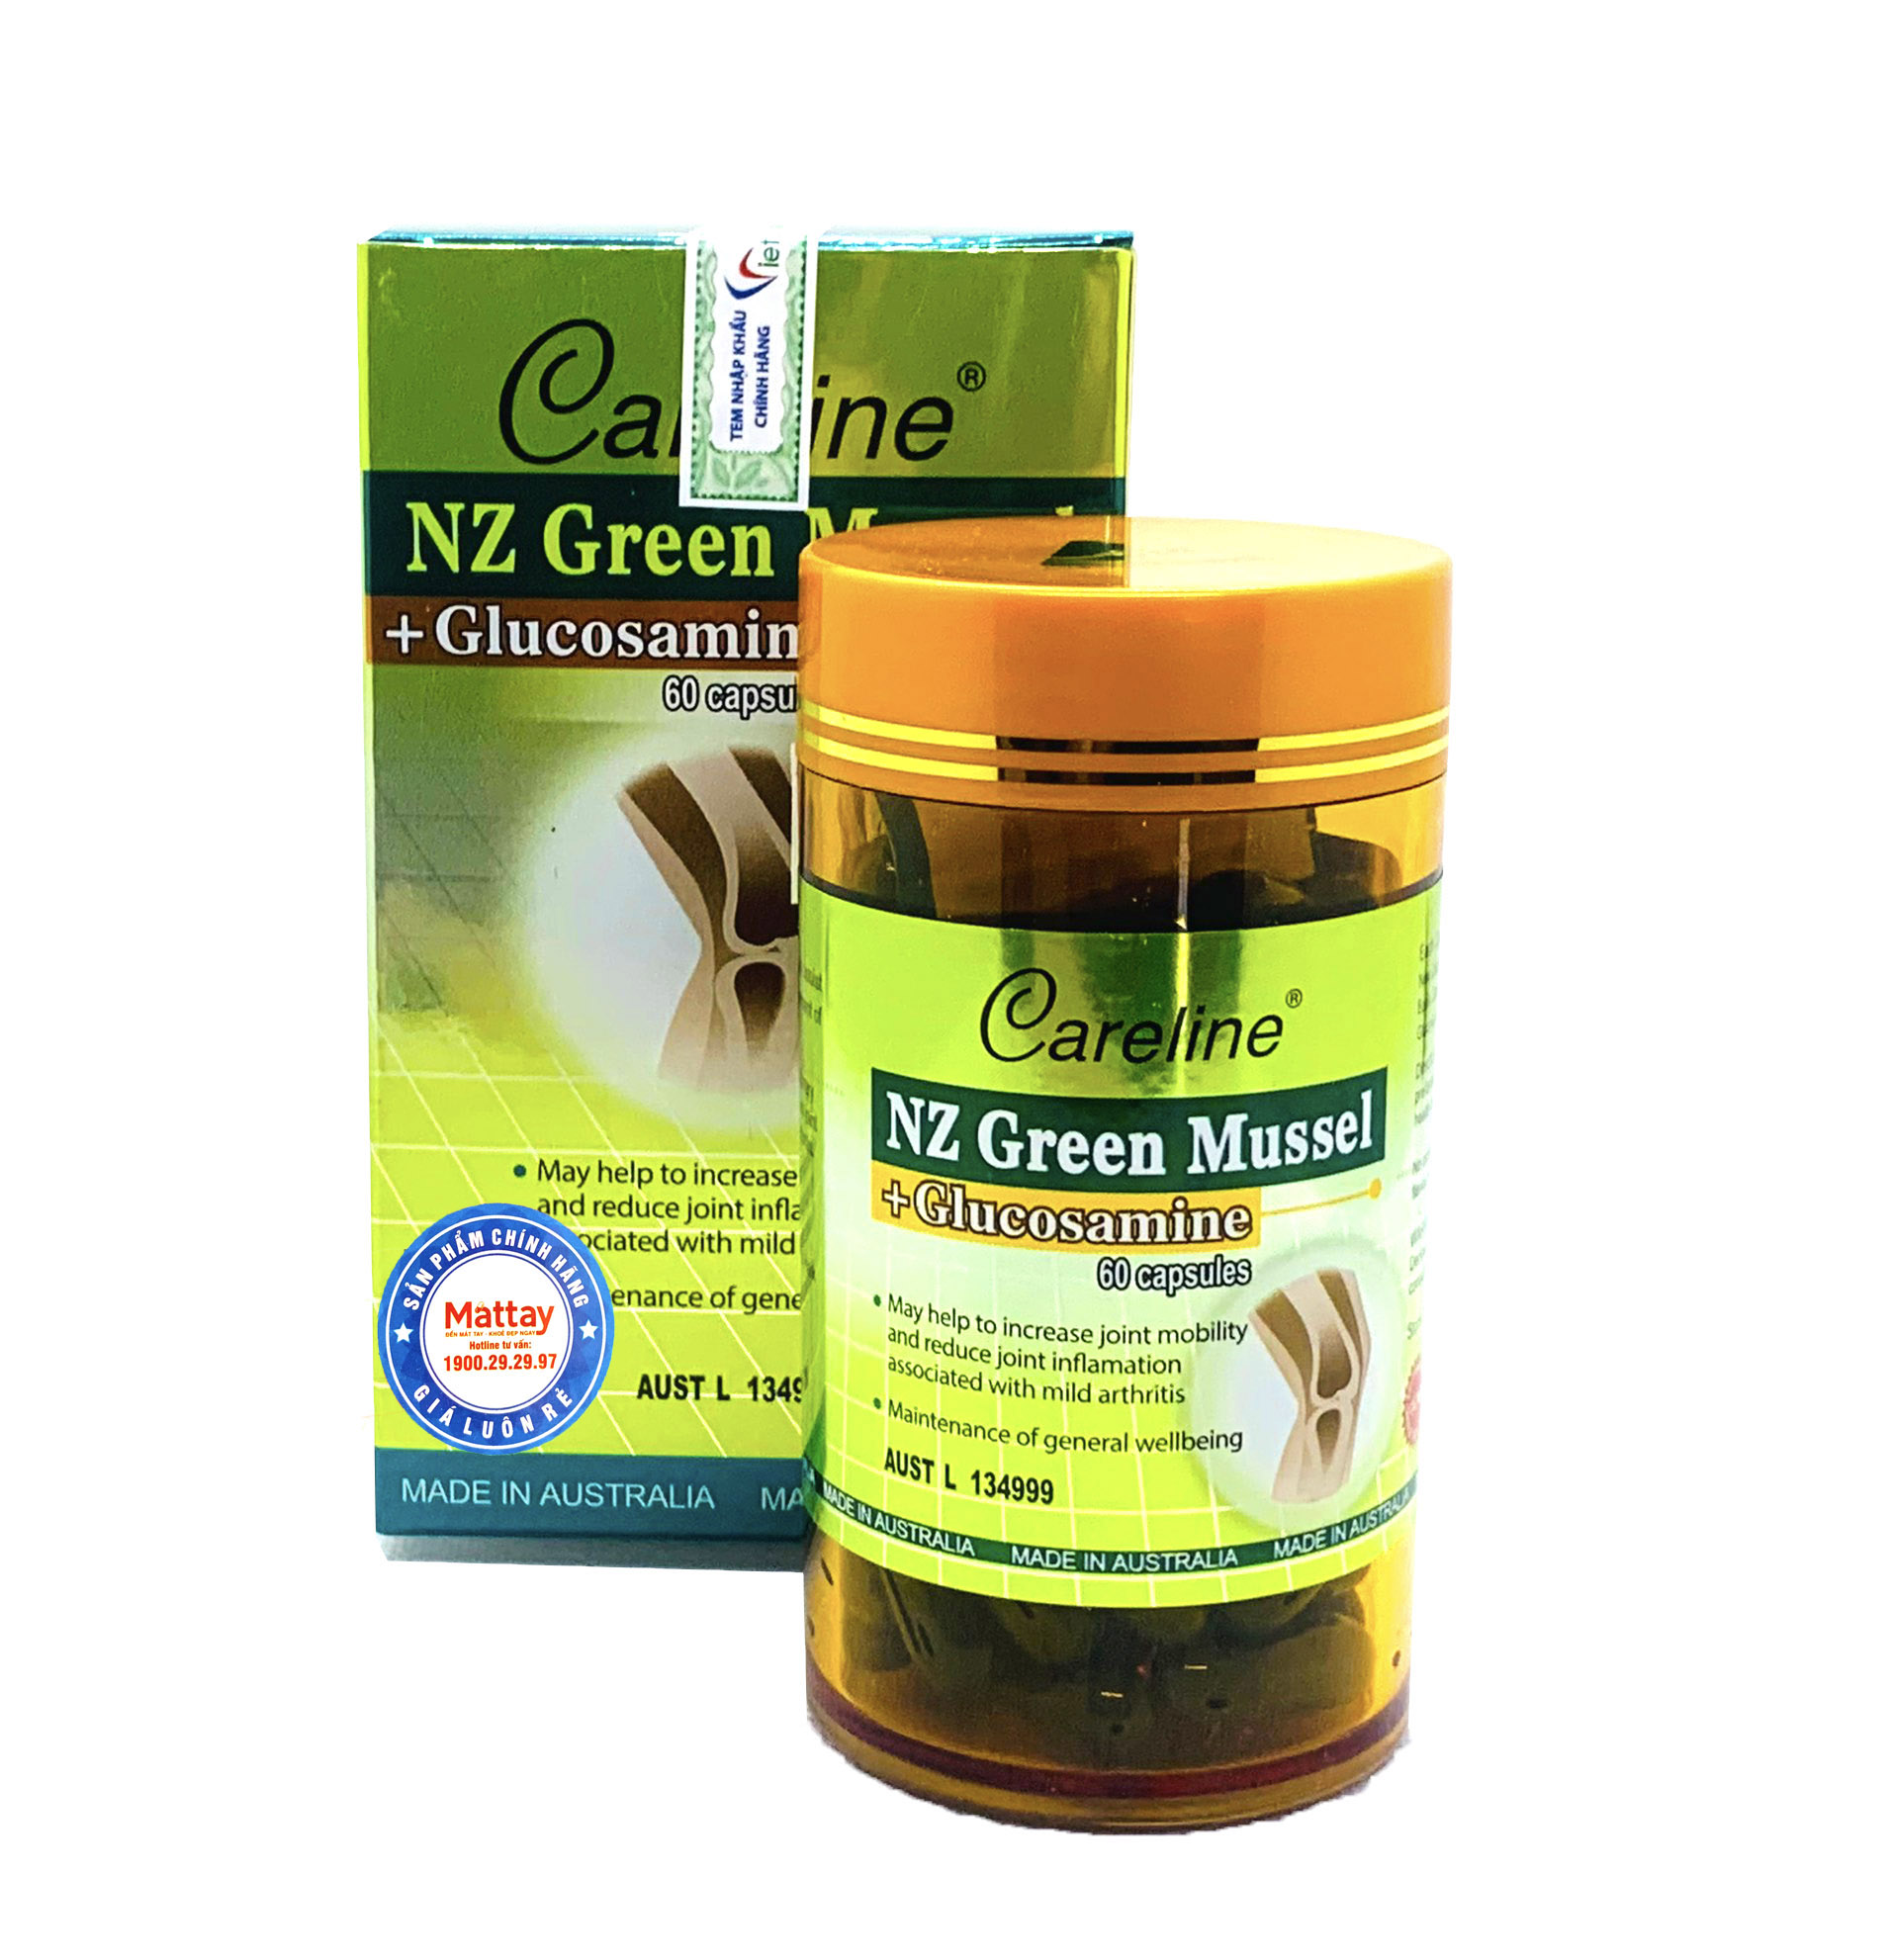 NZ Green Mussel + Glucosamine